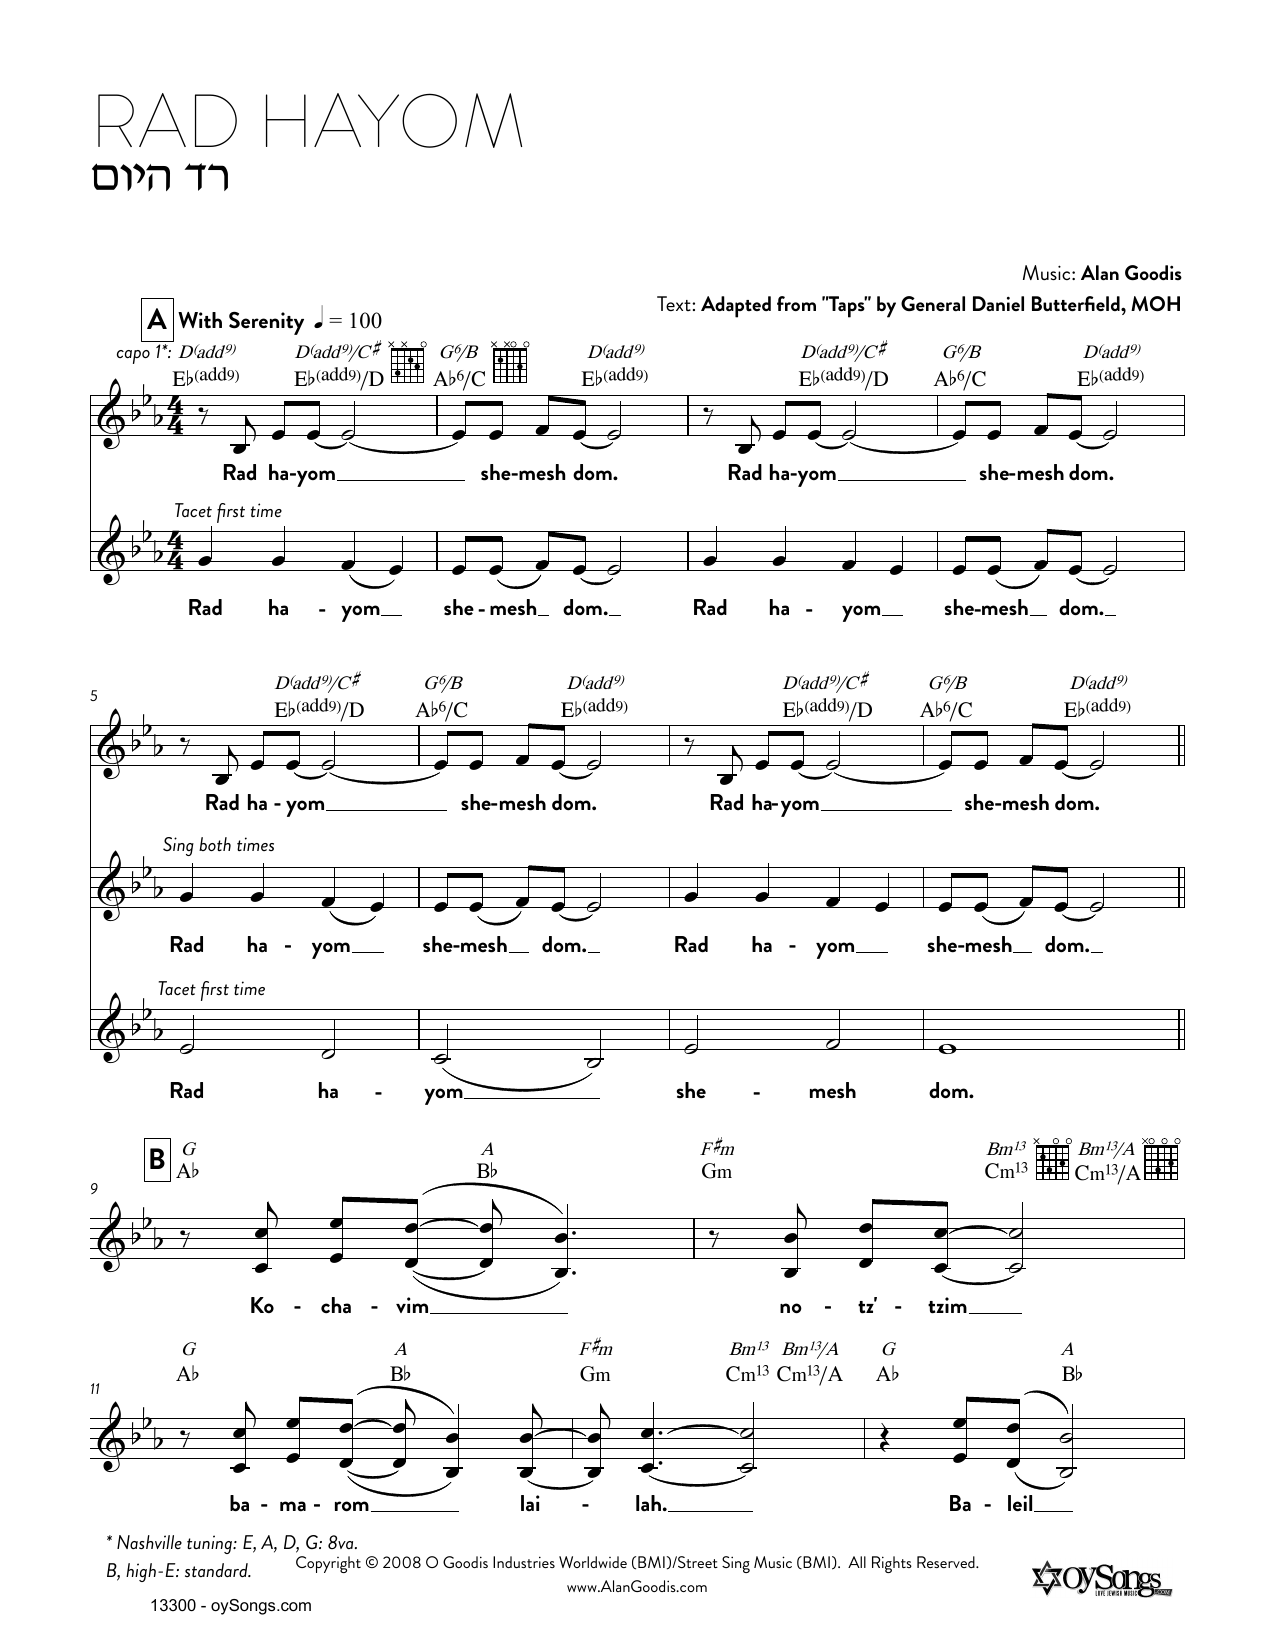 Alan Goodis Rad Hayom Sheet Music Notes & Chords for Real Book – Melody, Lyrics & Chords - Download or Print PDF